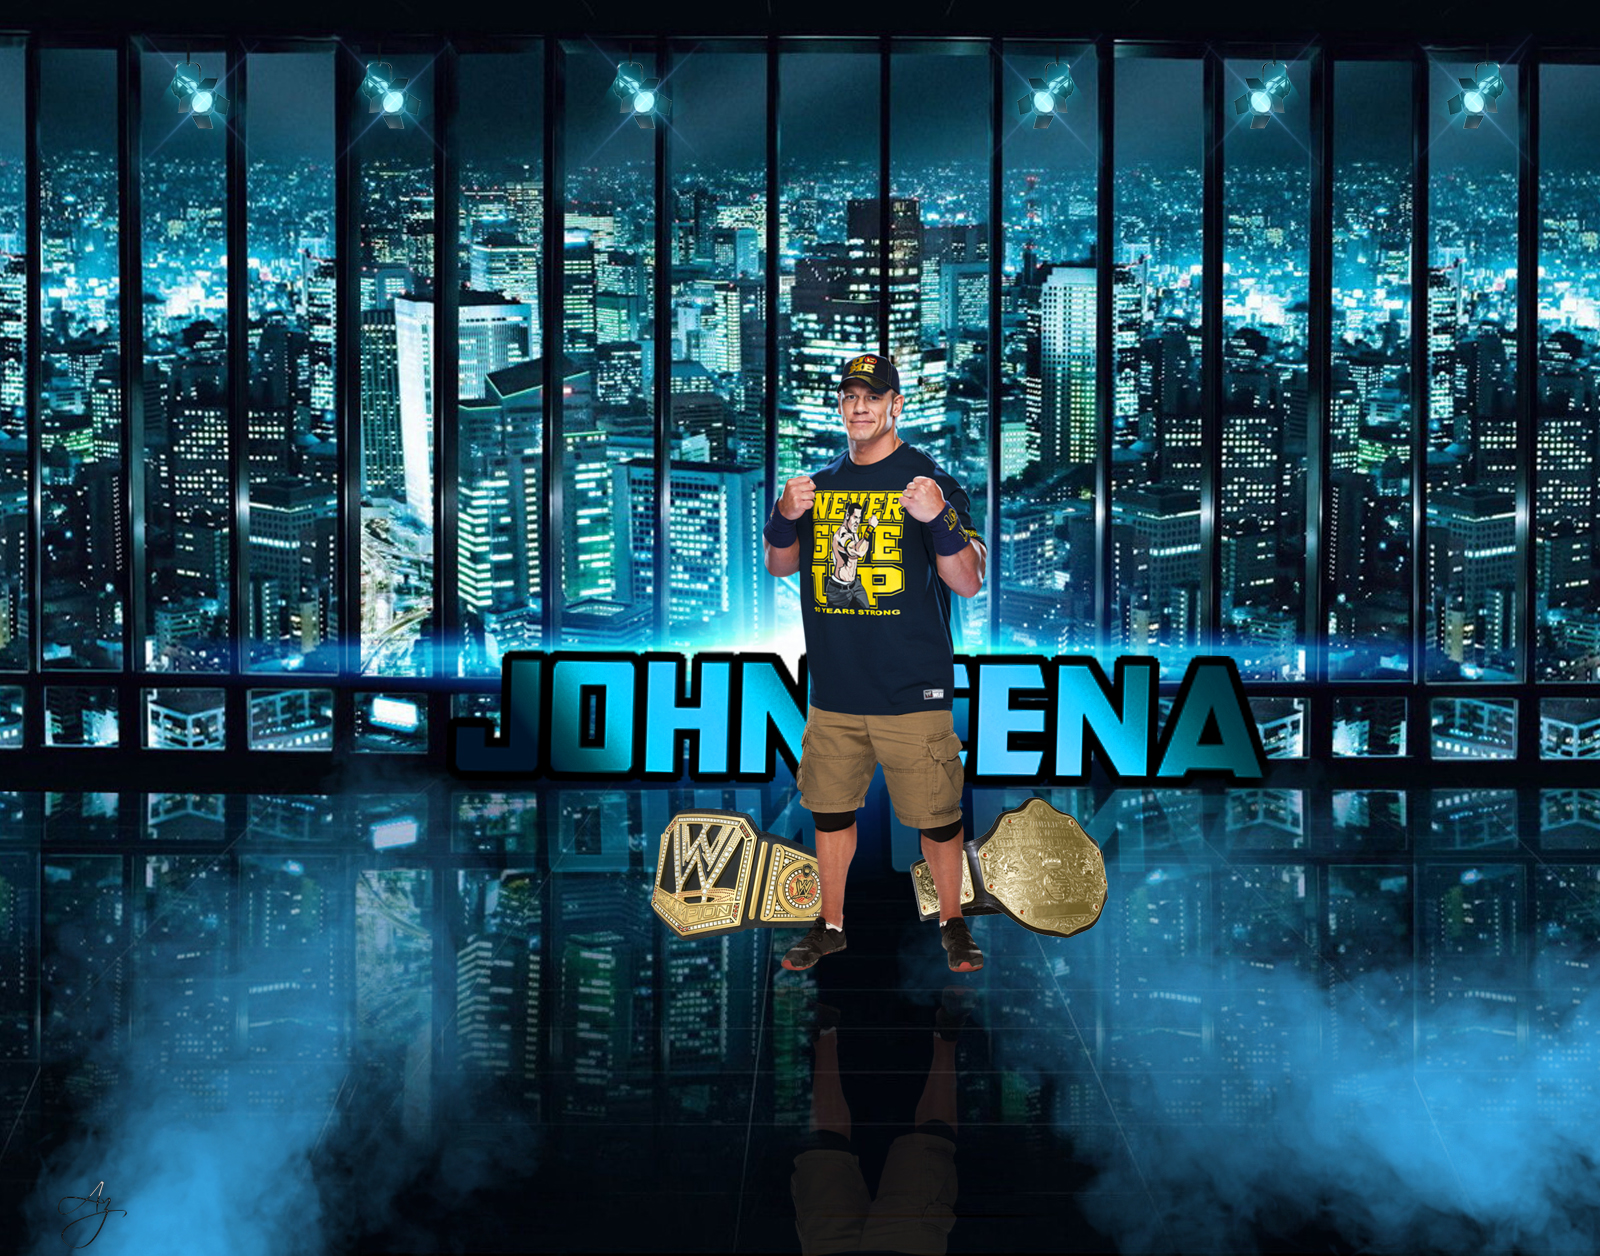 Wwe John Cena HD Wallpaper By Funkyali